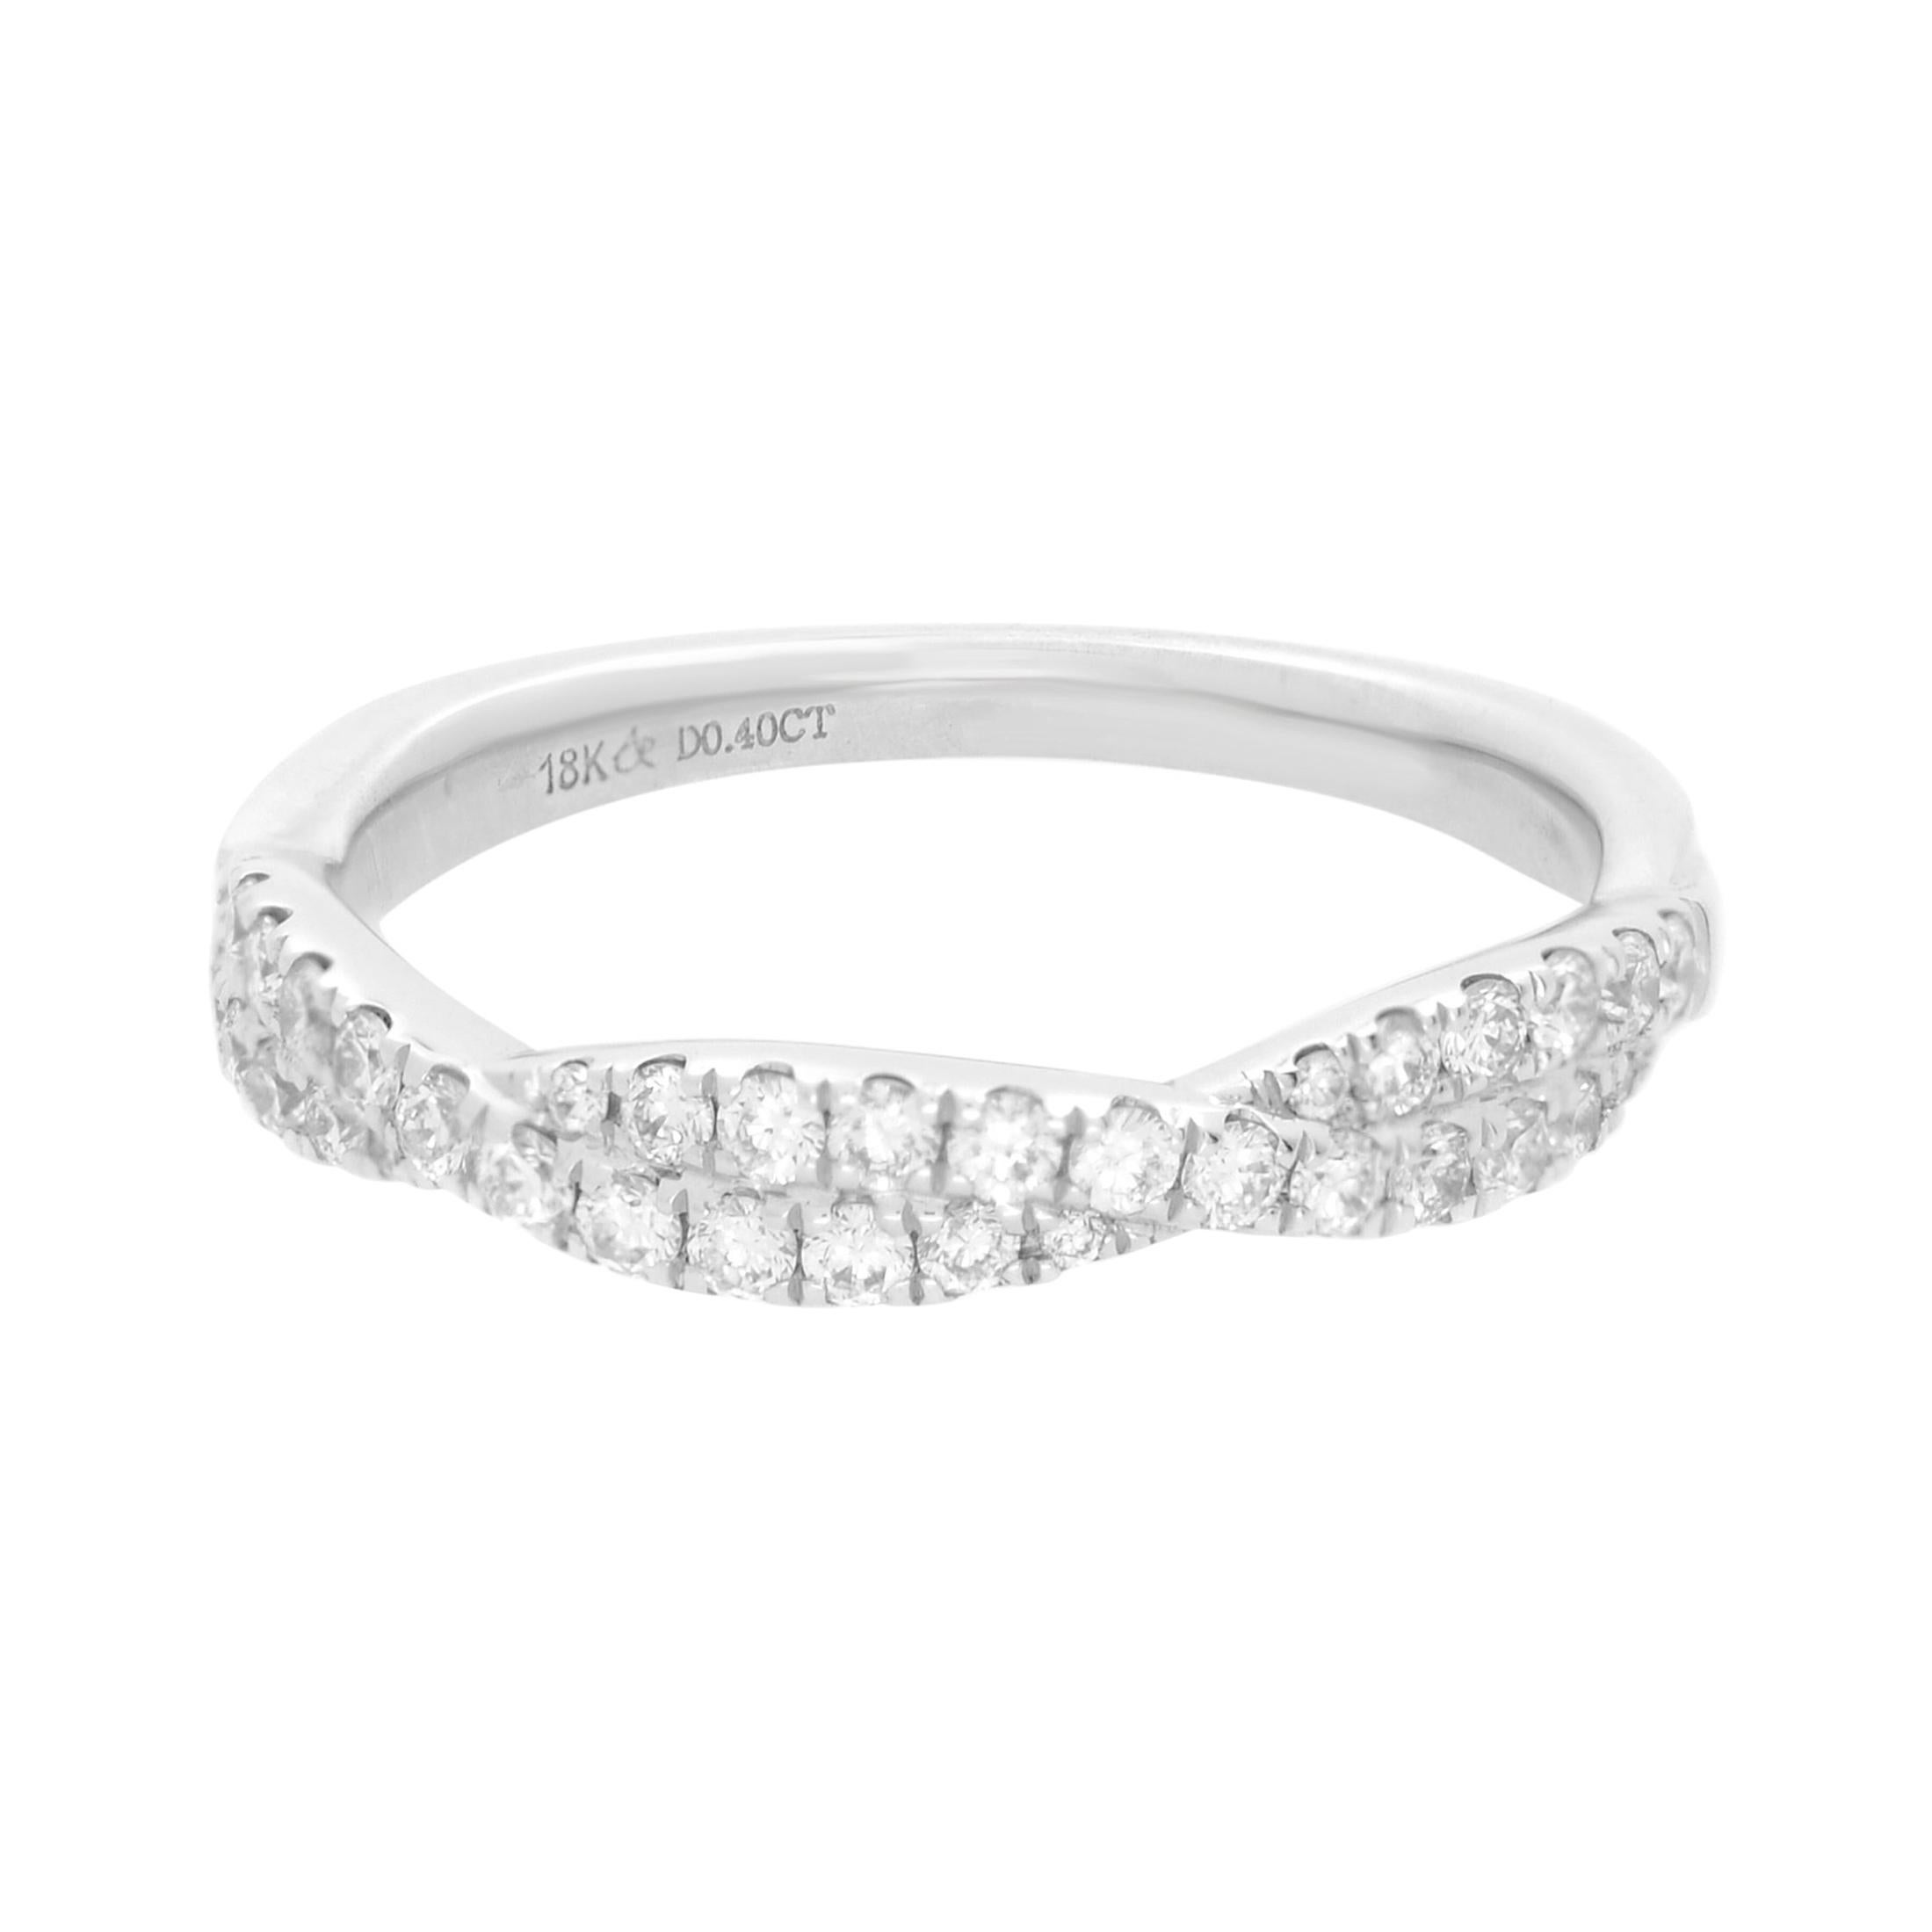 Rachel Koen Twist Diamond Wedding Band Ring 18K White Gold 0.40cttw For Sale